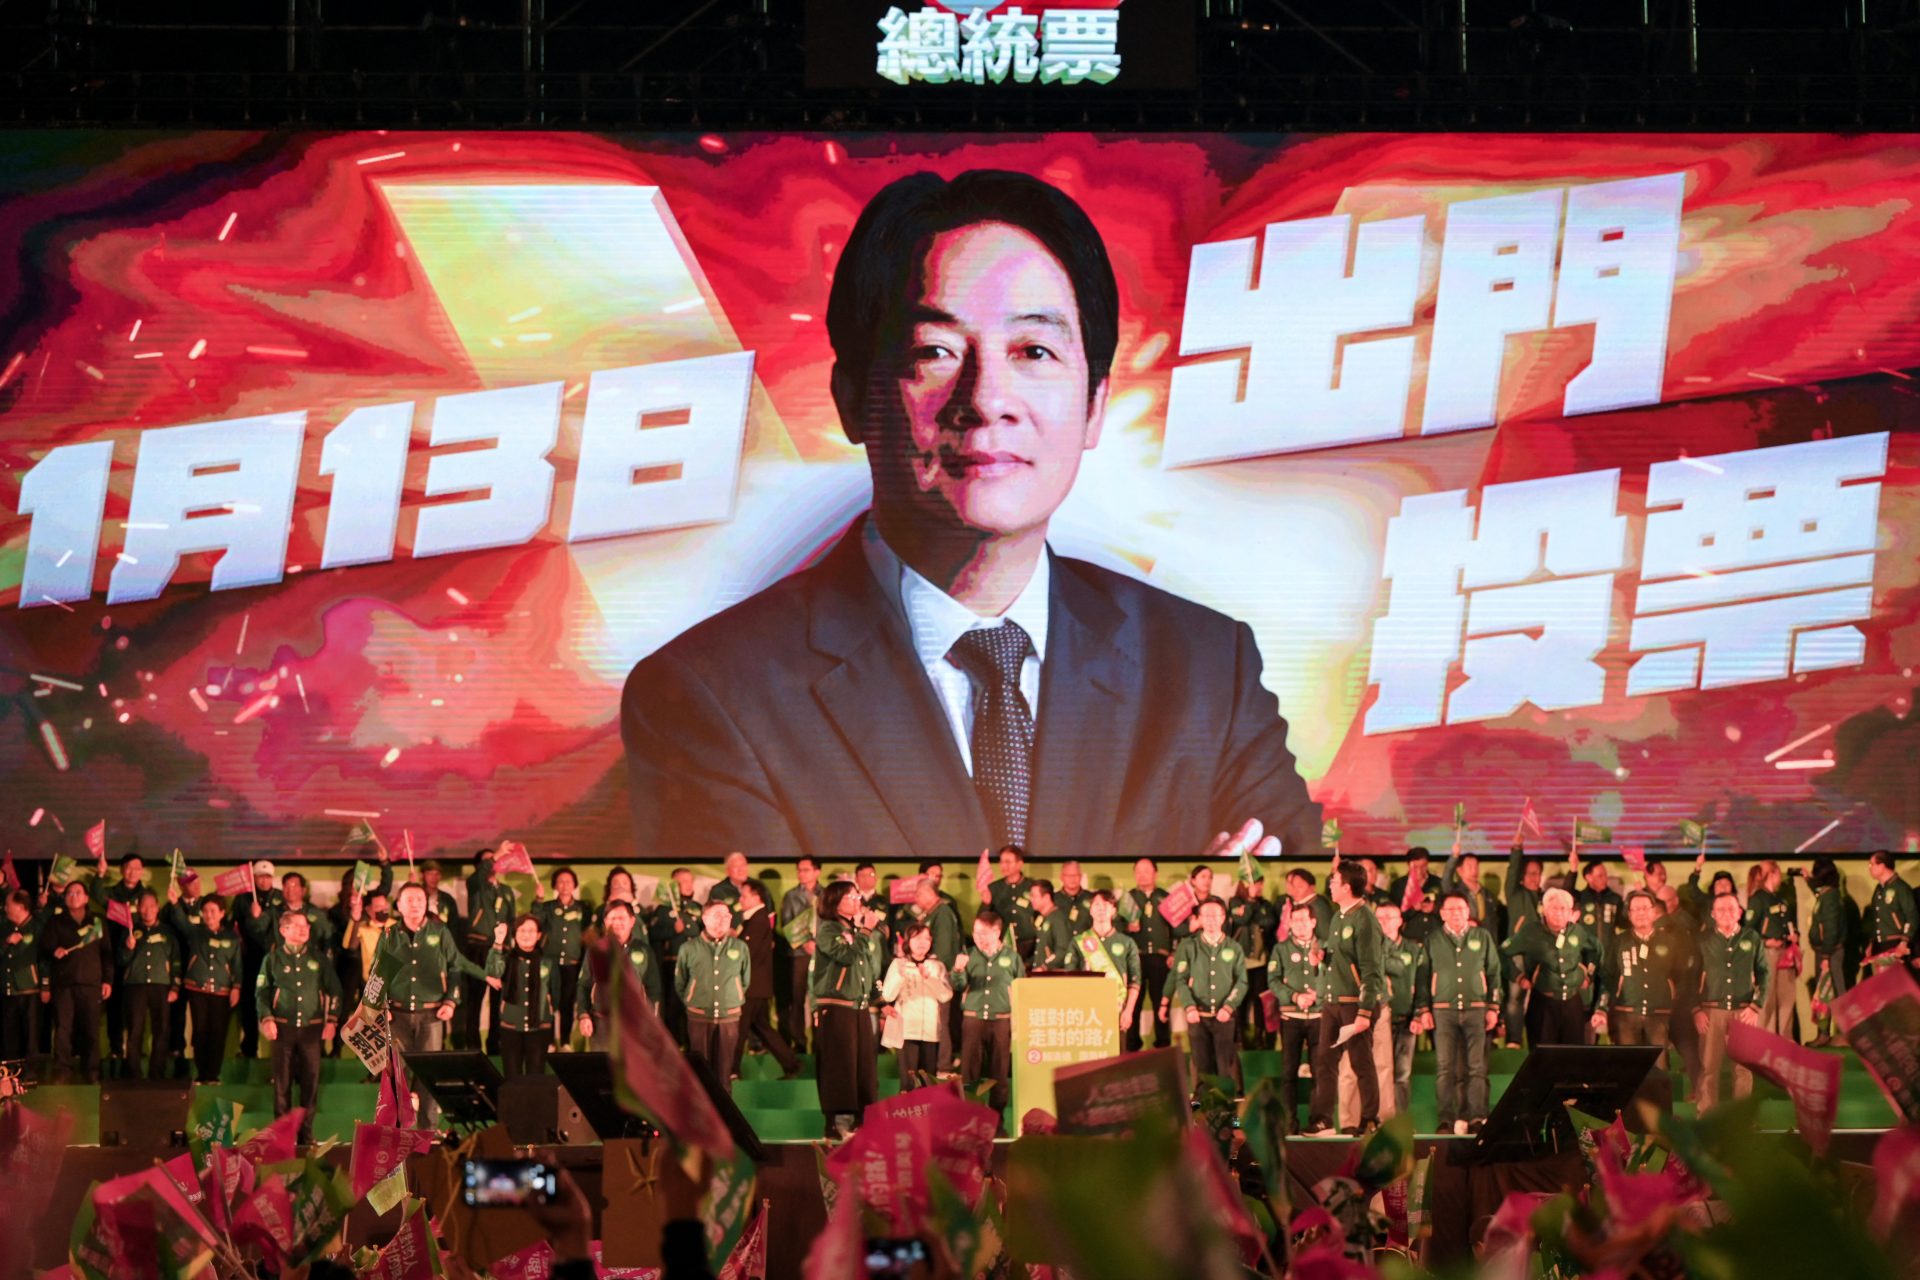 Taiwan's new president